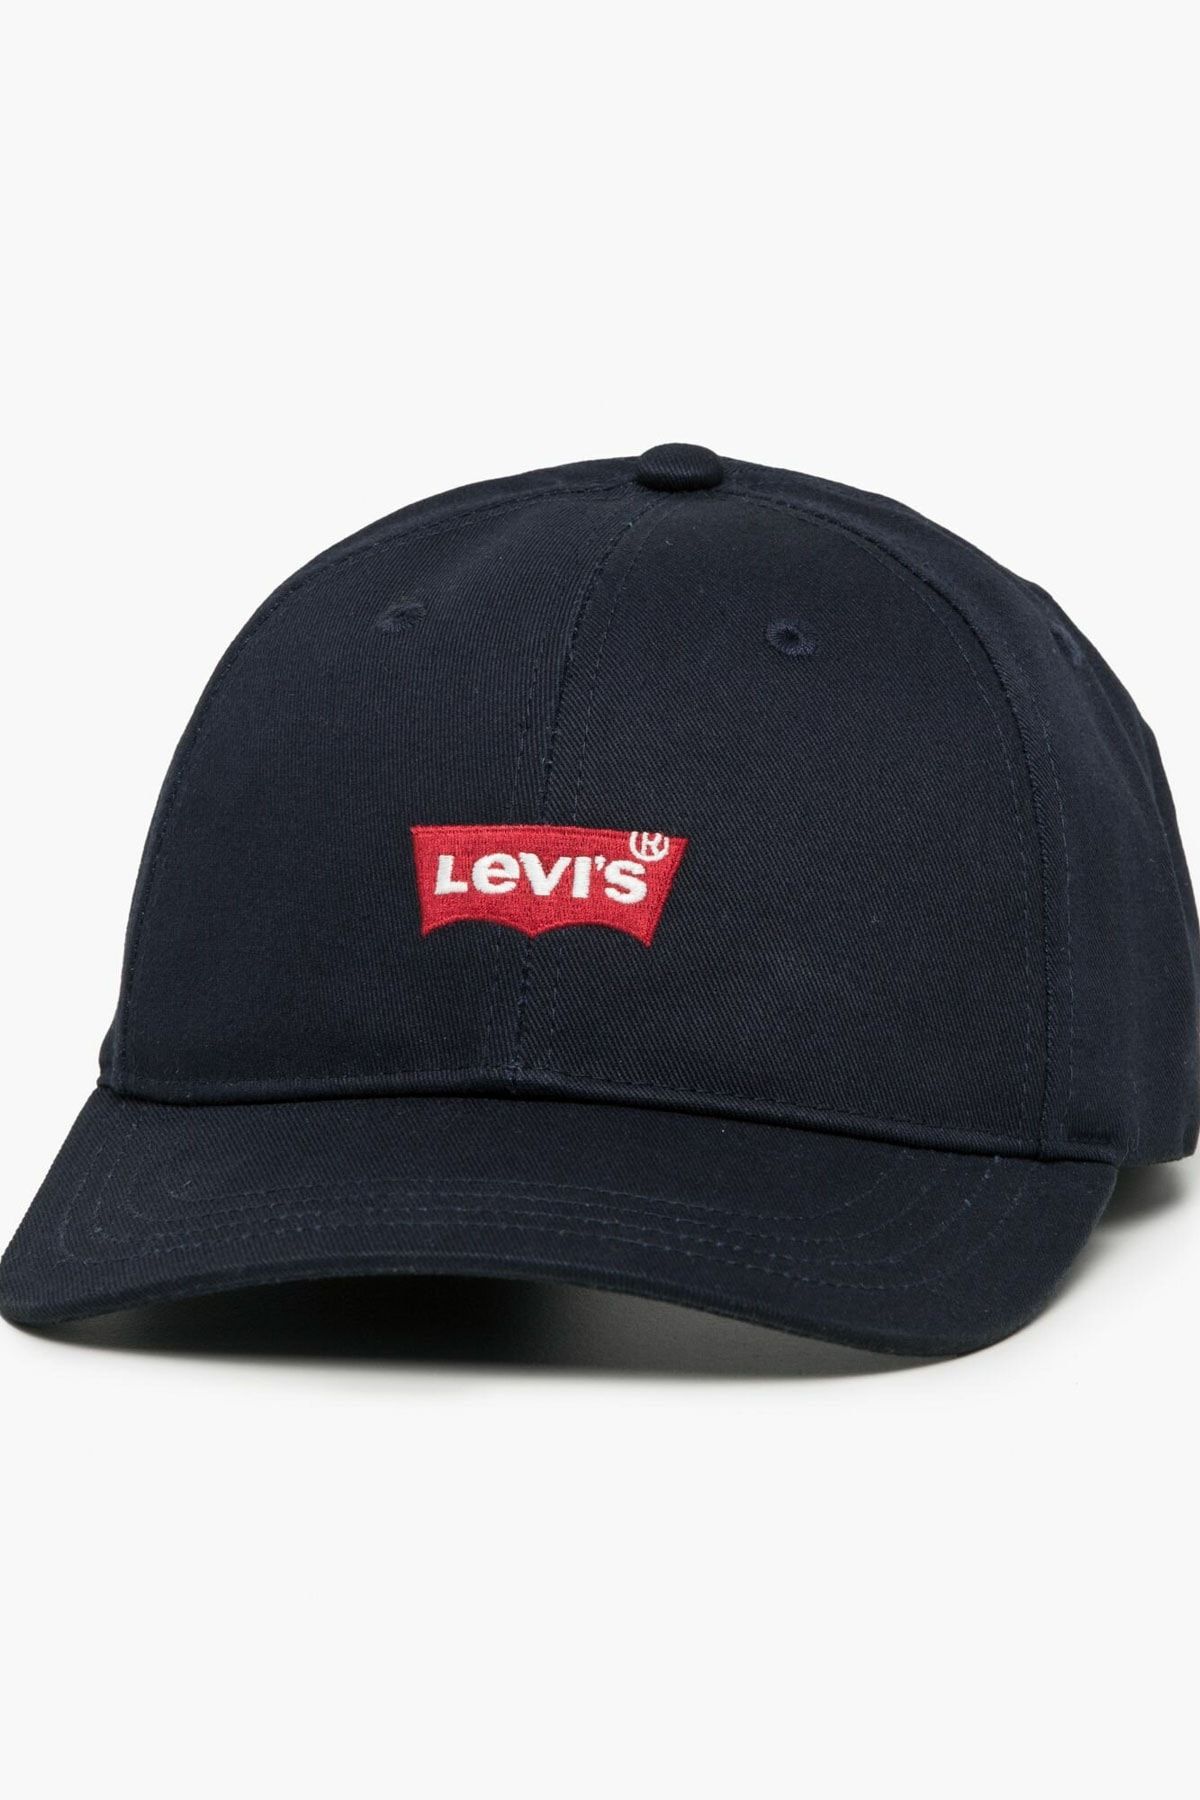 Levi's Unisex Lacivert Şapka - 38021-0216